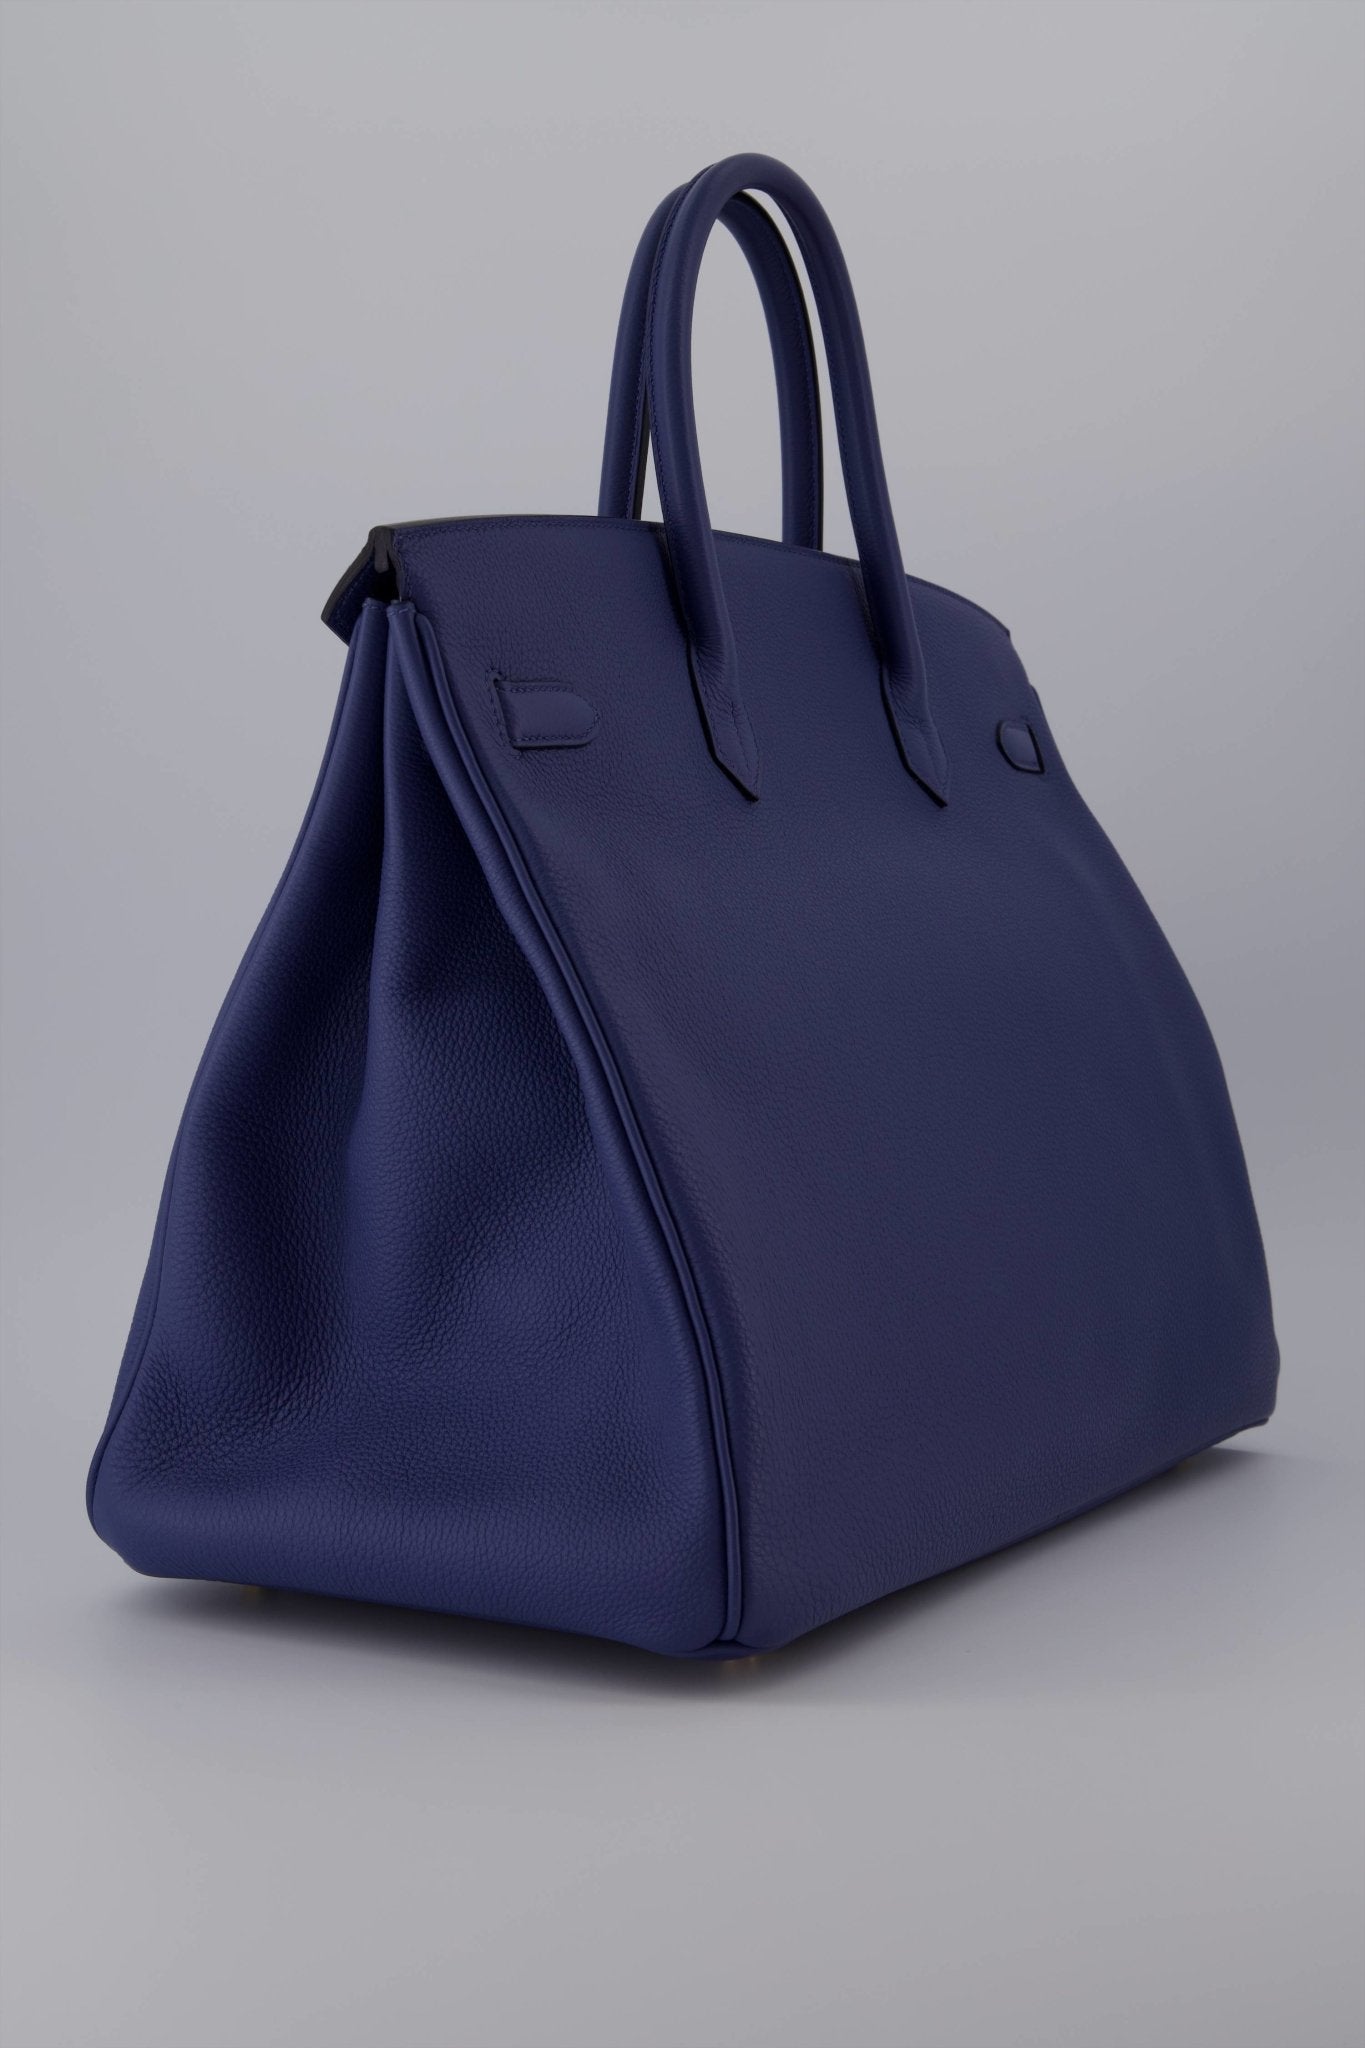 Debuting the Hermes Brighton Blue Birkin :) + Bags of La Greta of